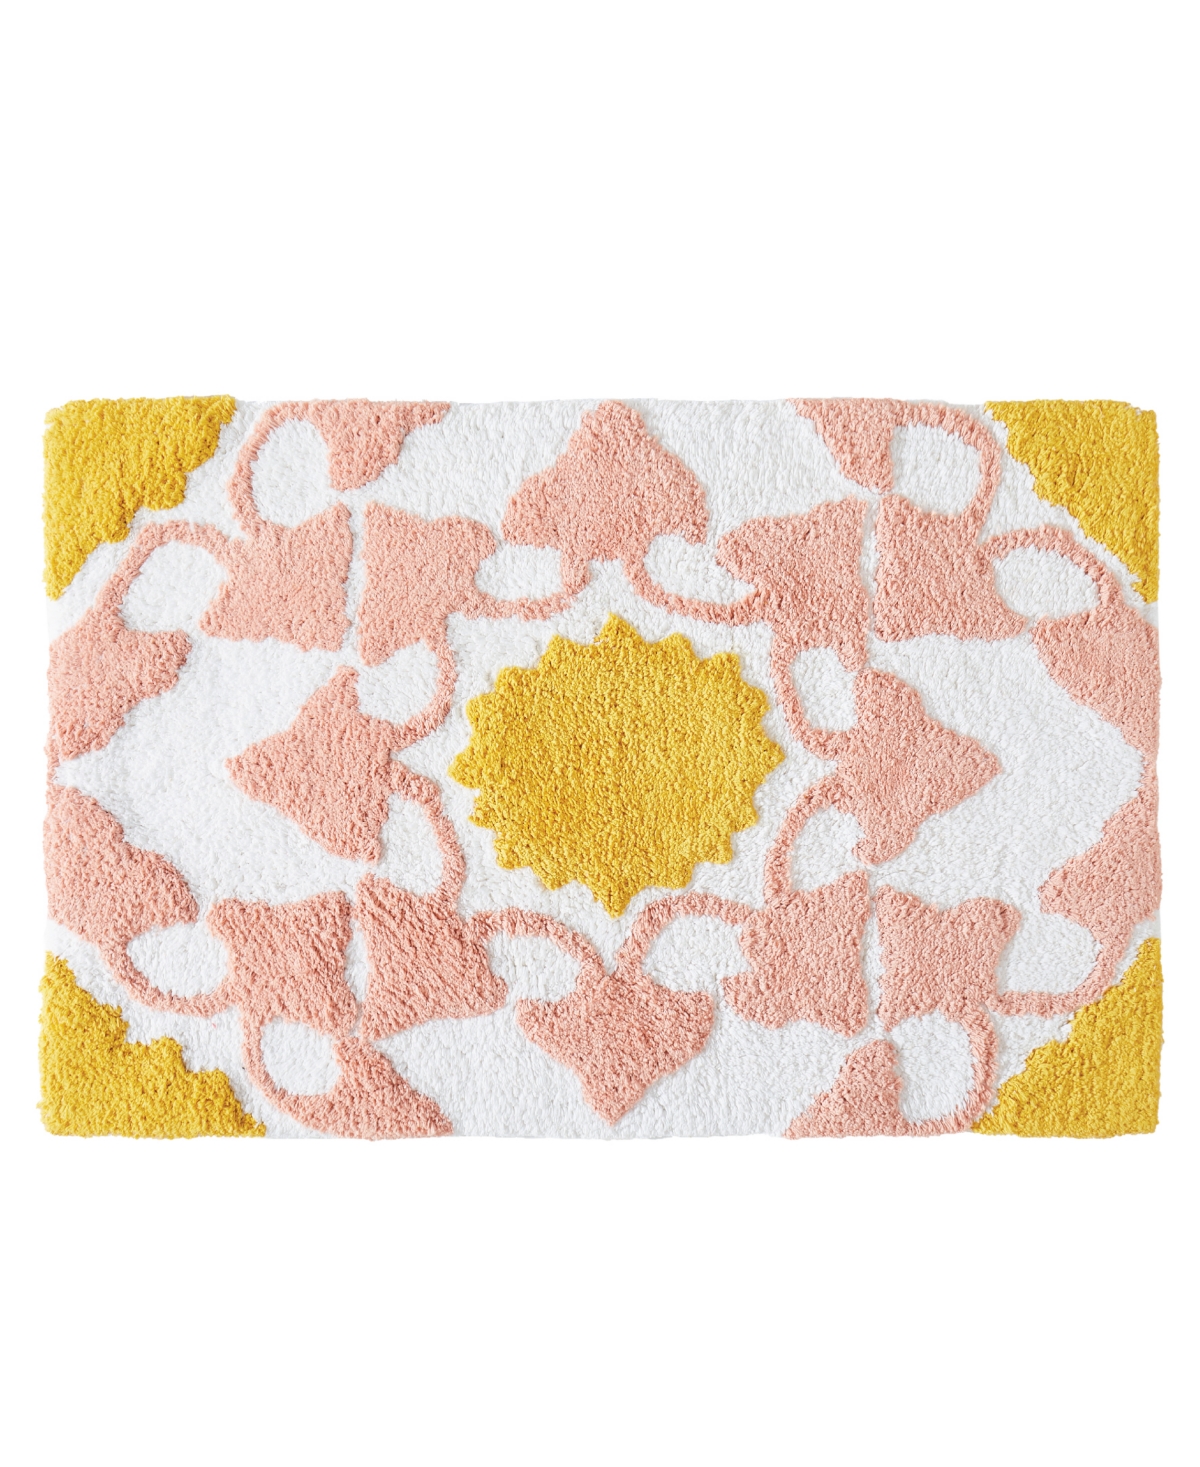 Lorena Cotton Bath Rug, 20" x 32" - Pink, Yellow